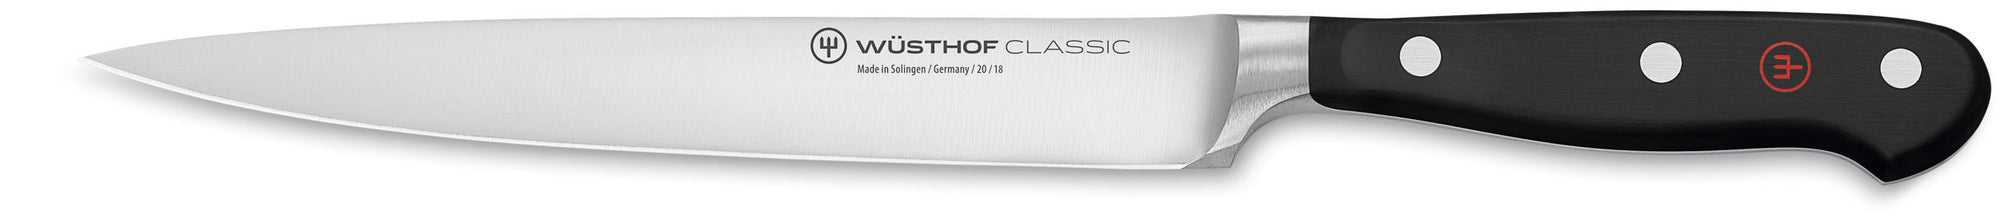 Wusthof Canada Classic 7.1-inch (18 cm) Flexible Fillet Knife - 4550-18